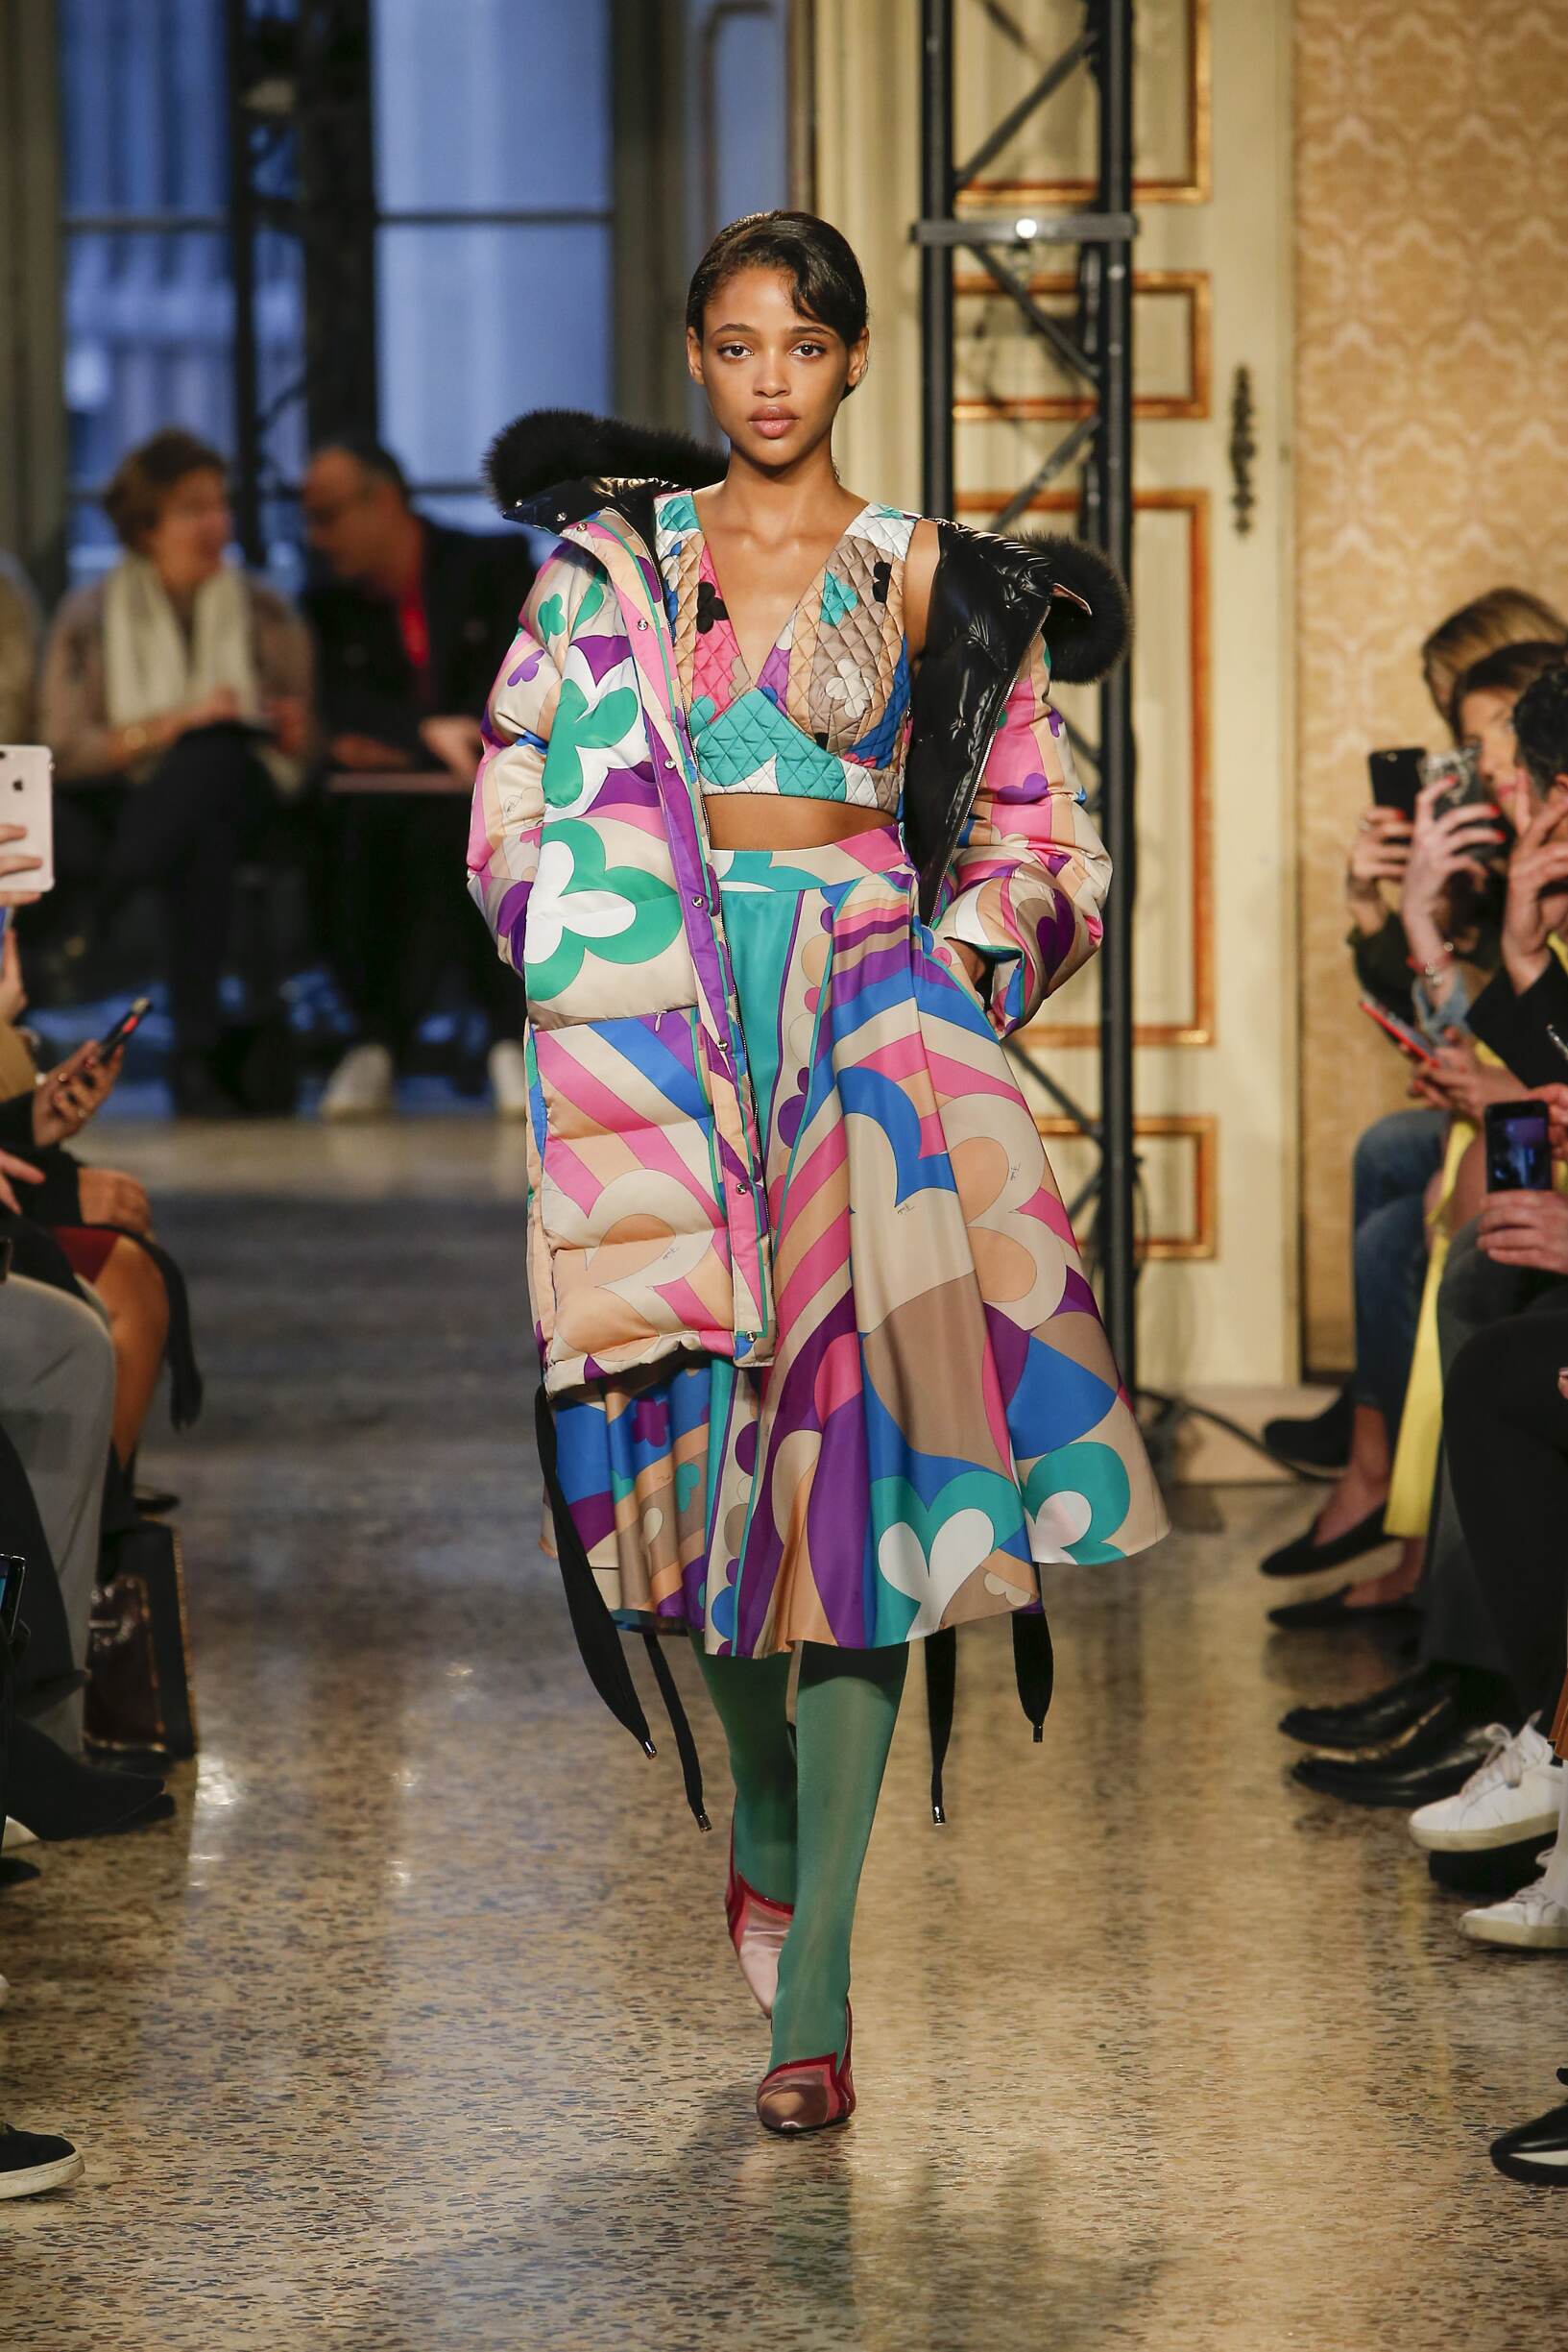 Catwalk Images: Emilio Pucci S/S 18 Womenswear